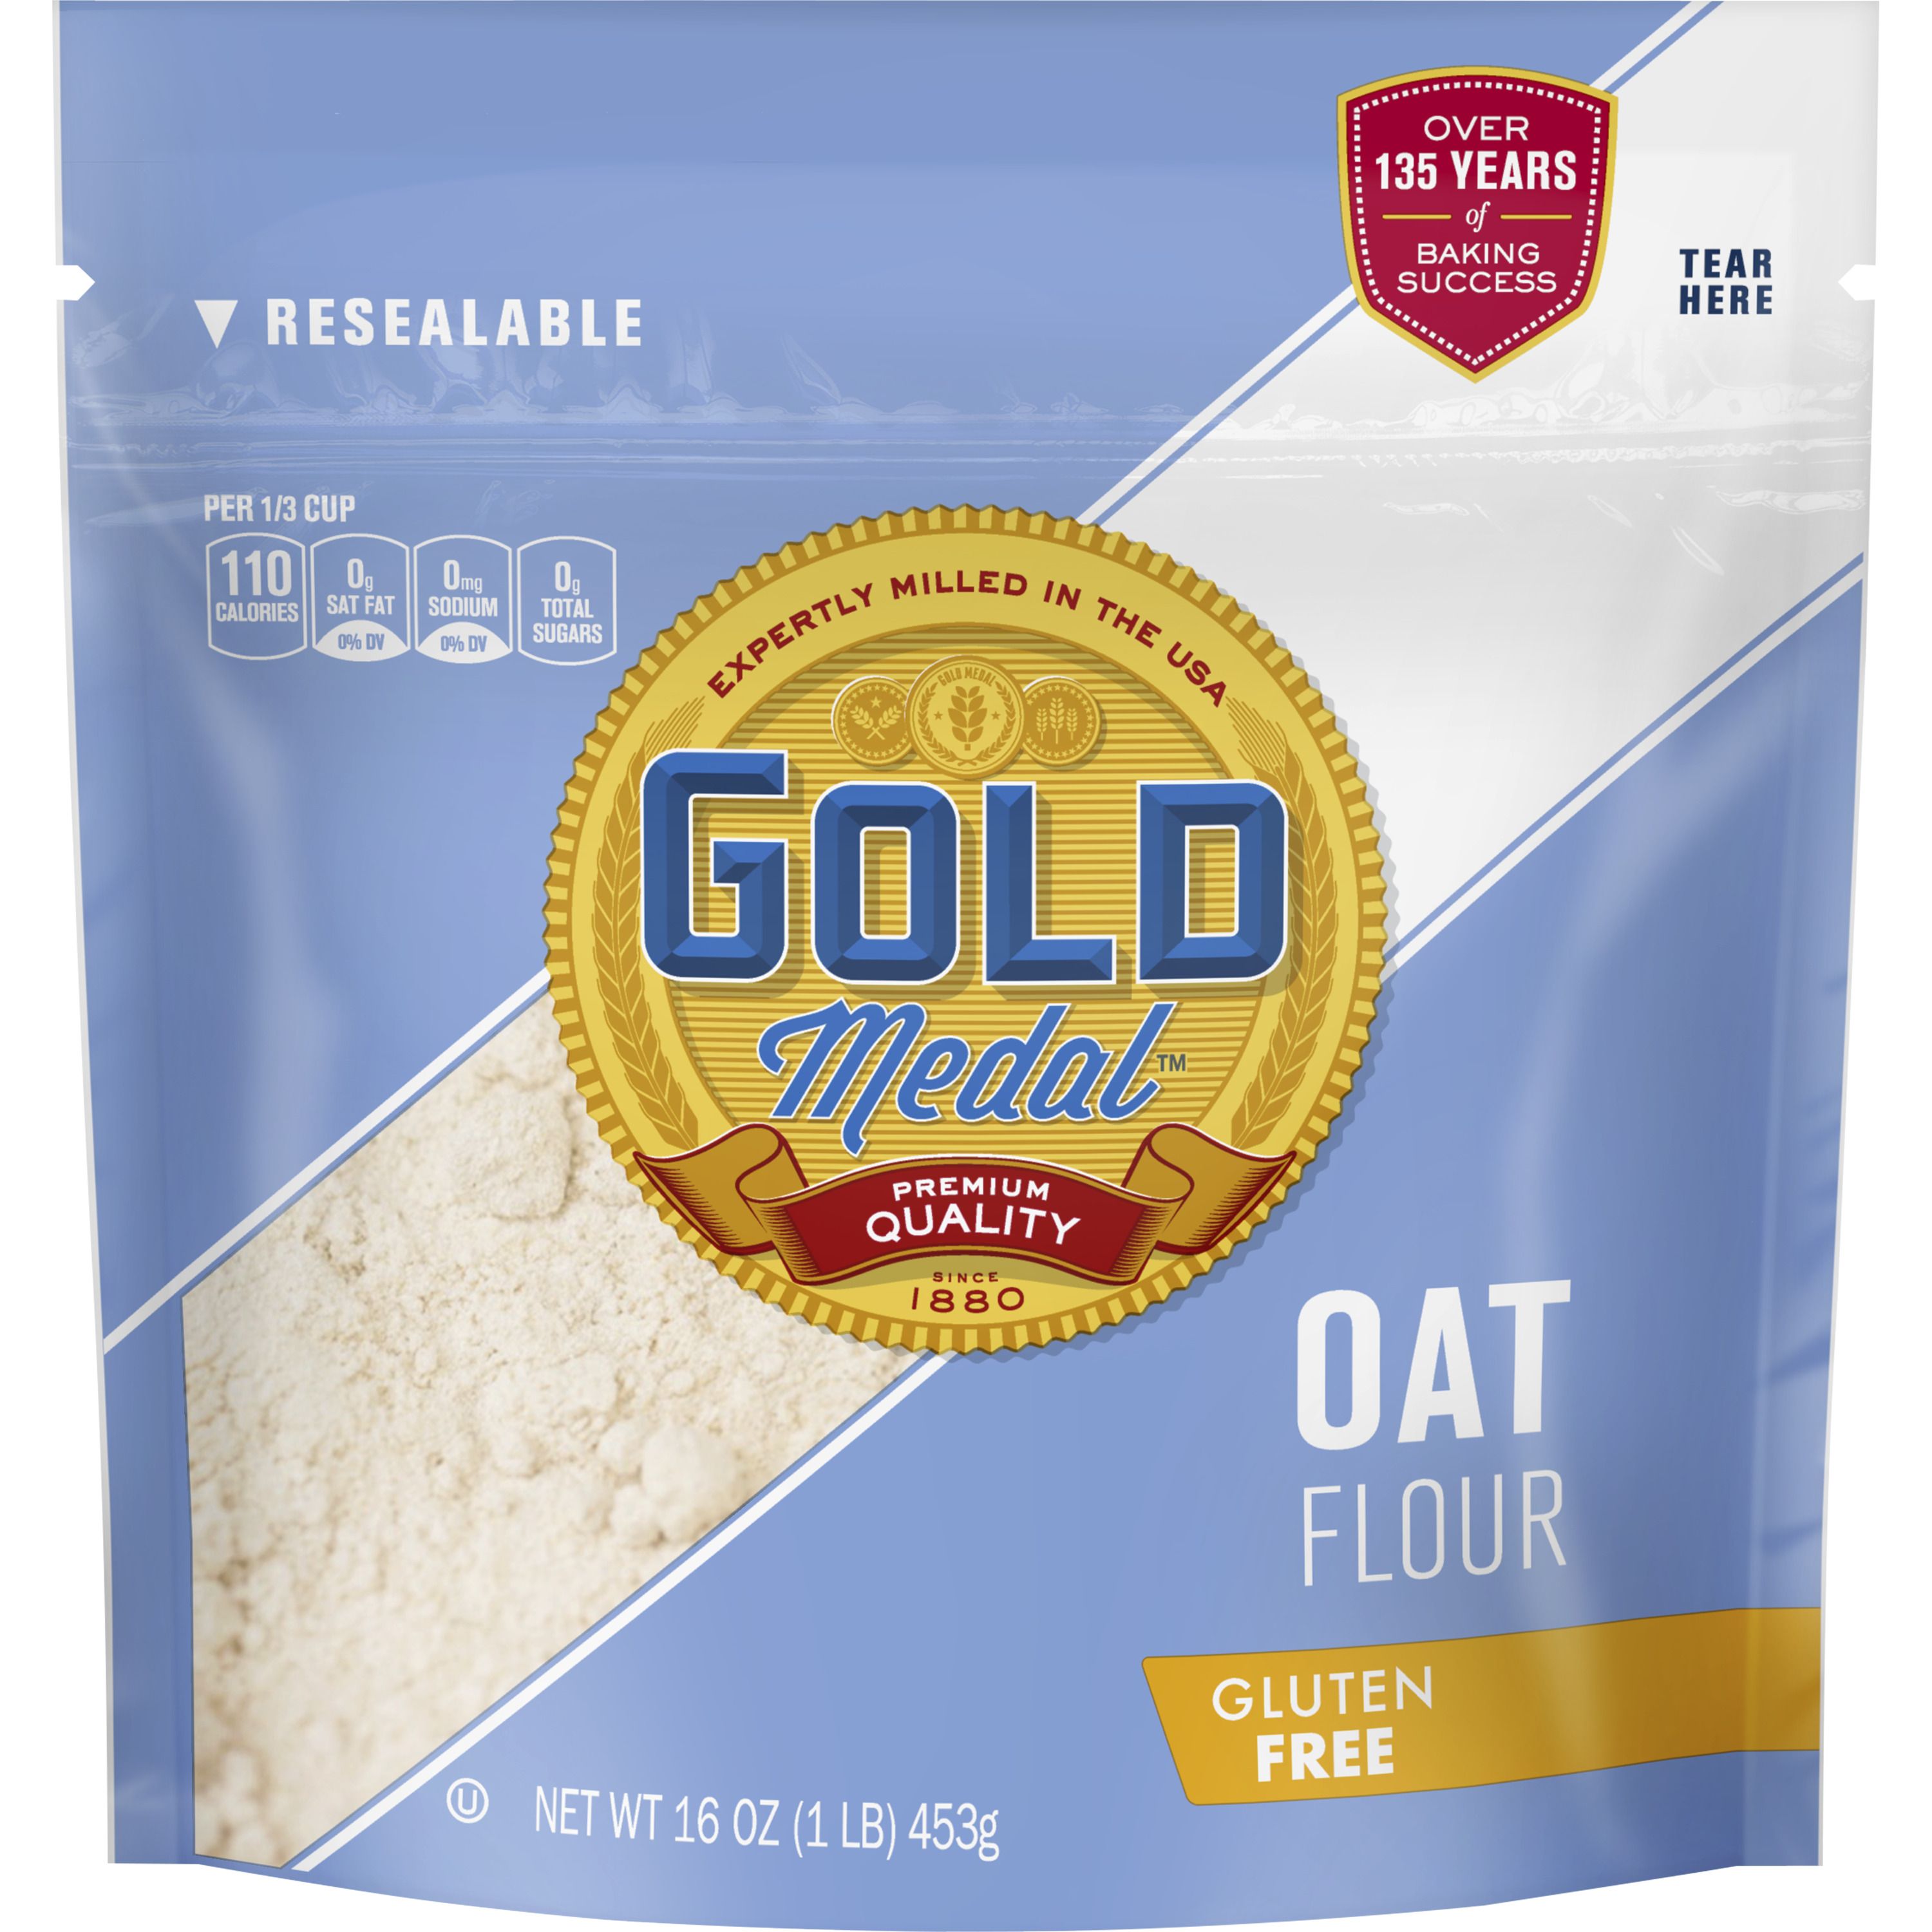 Gold Medal Gluten Free Oat Flour, 16oz - Front